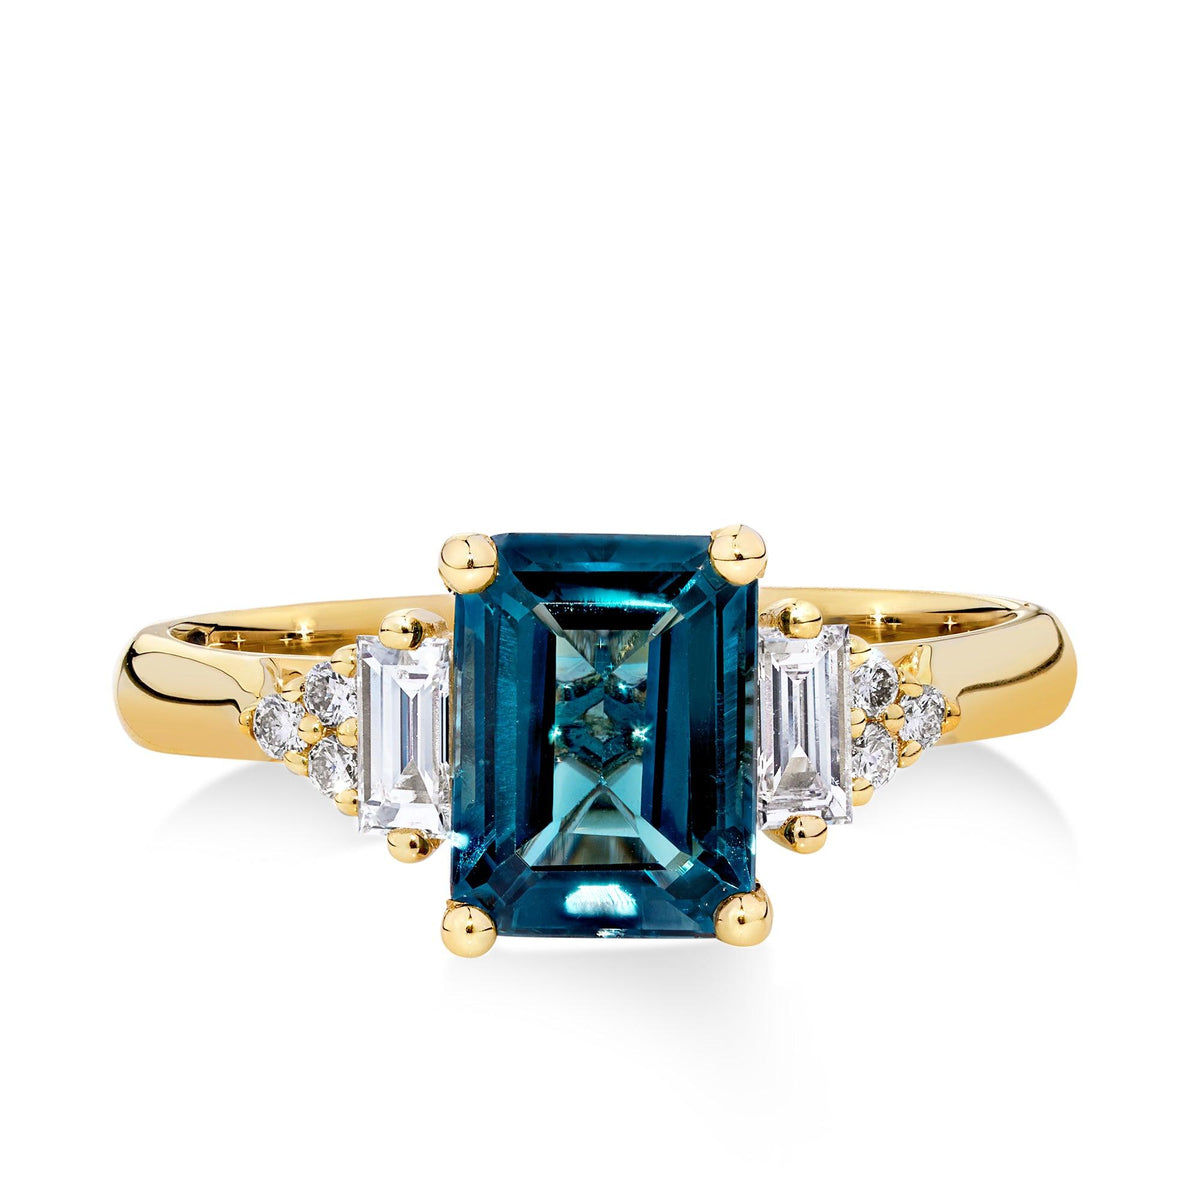 Bluebird London Blue Topaz & 0.26ct TW Diamond Ring in 9ct Yellow Gold - Wallace Bishop